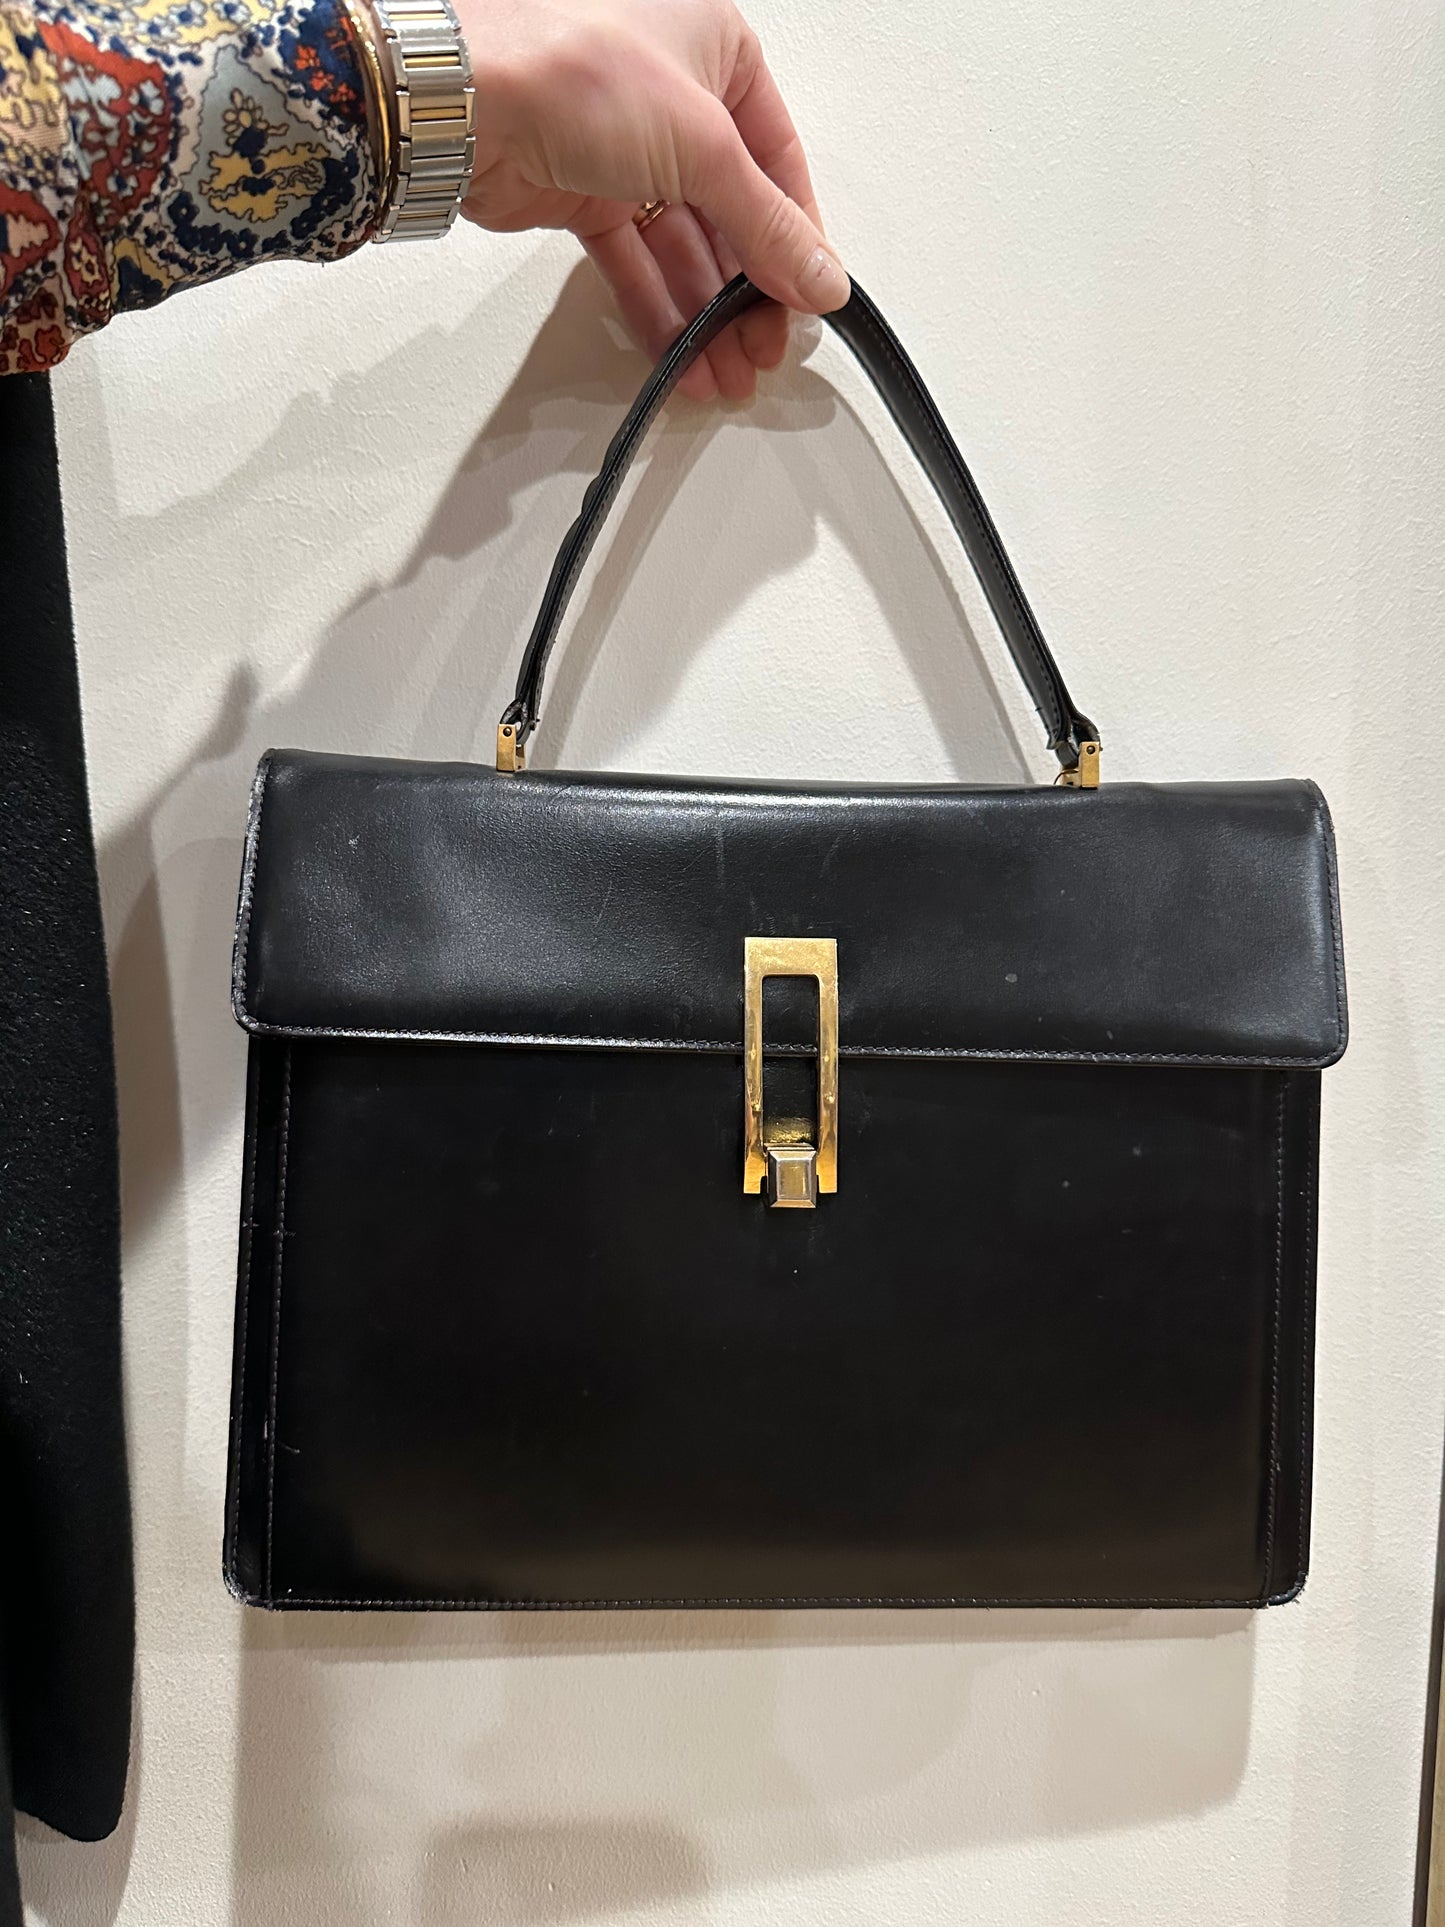 Black with gold hardware handbag